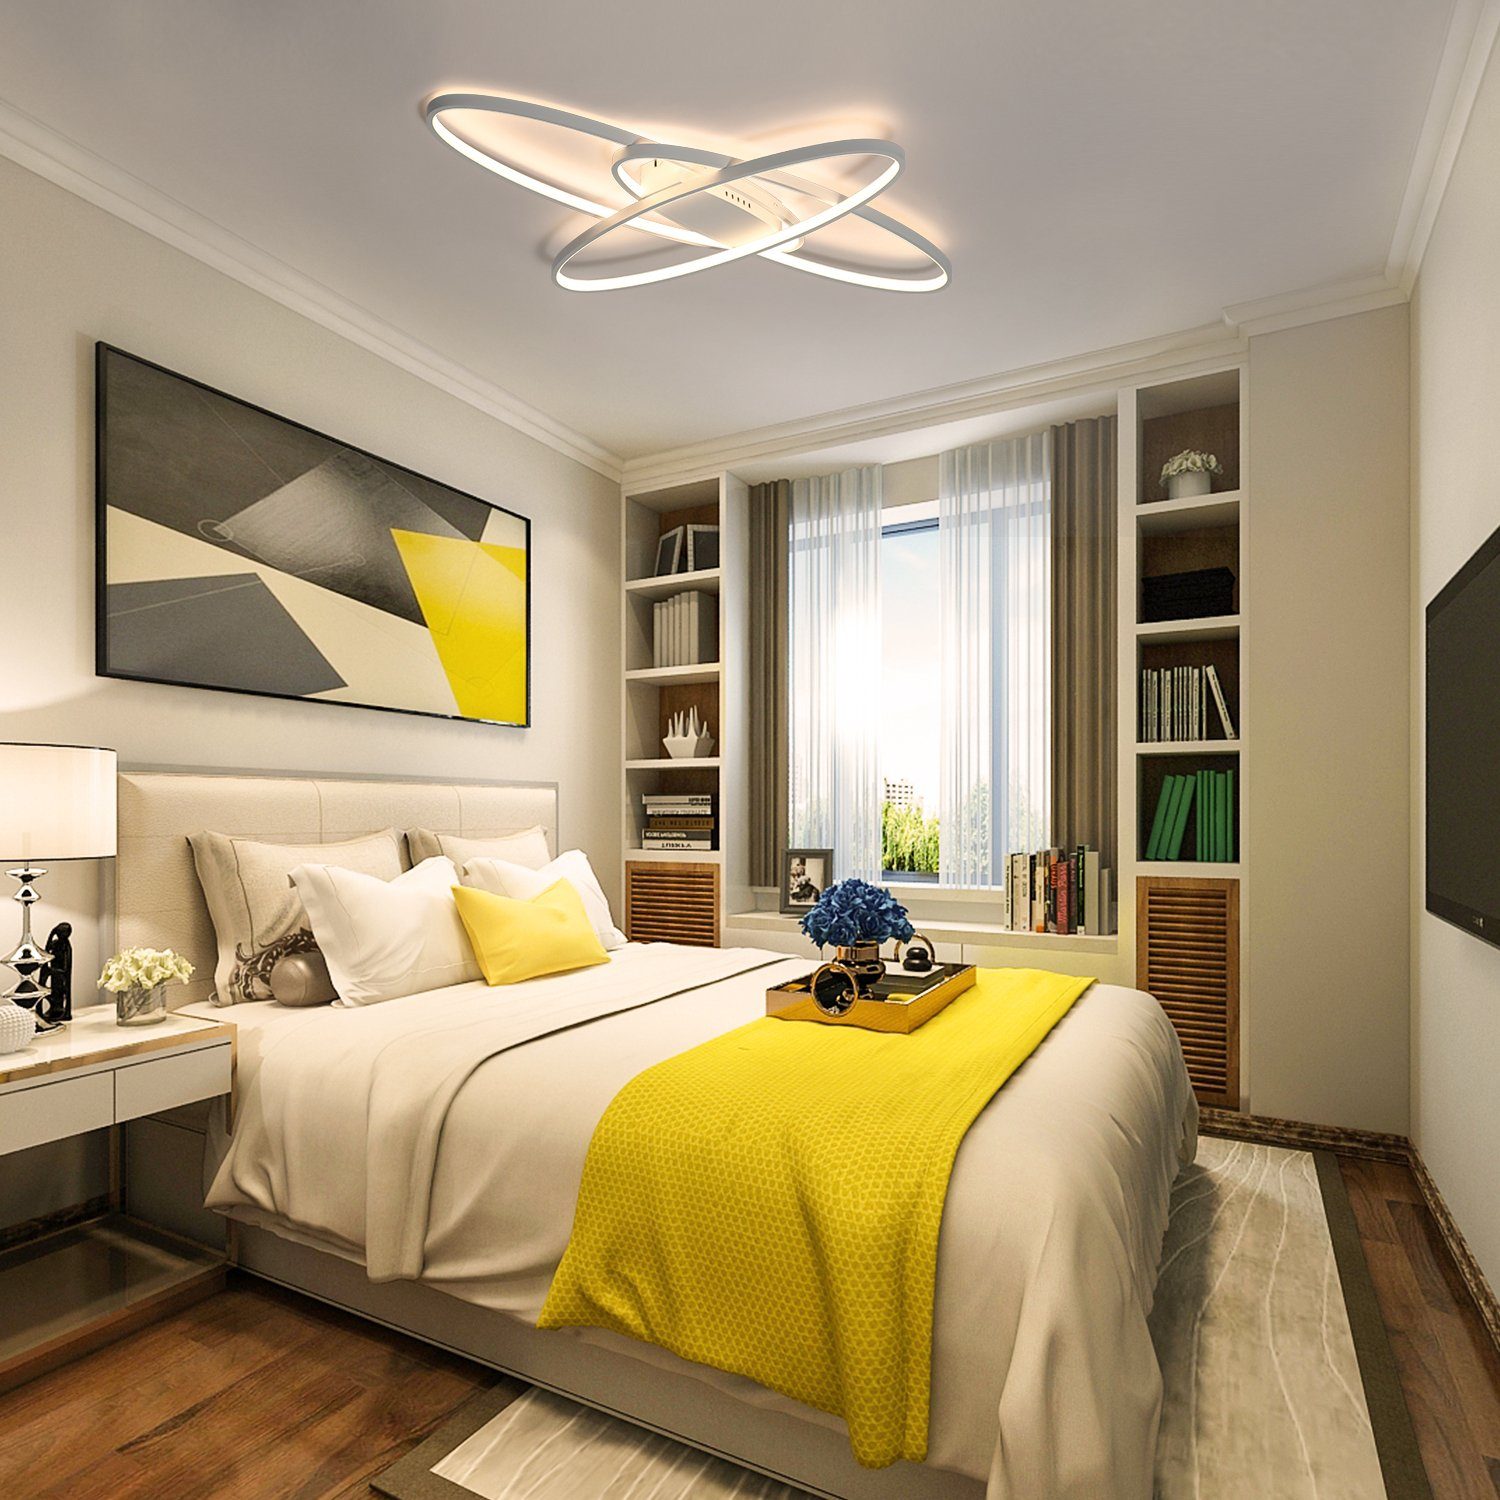 LED weiß Modern Deckenleuchte integriert Dimmbar Deckenleuchte ZMH Wohnzimmerlampe, fest LED LED